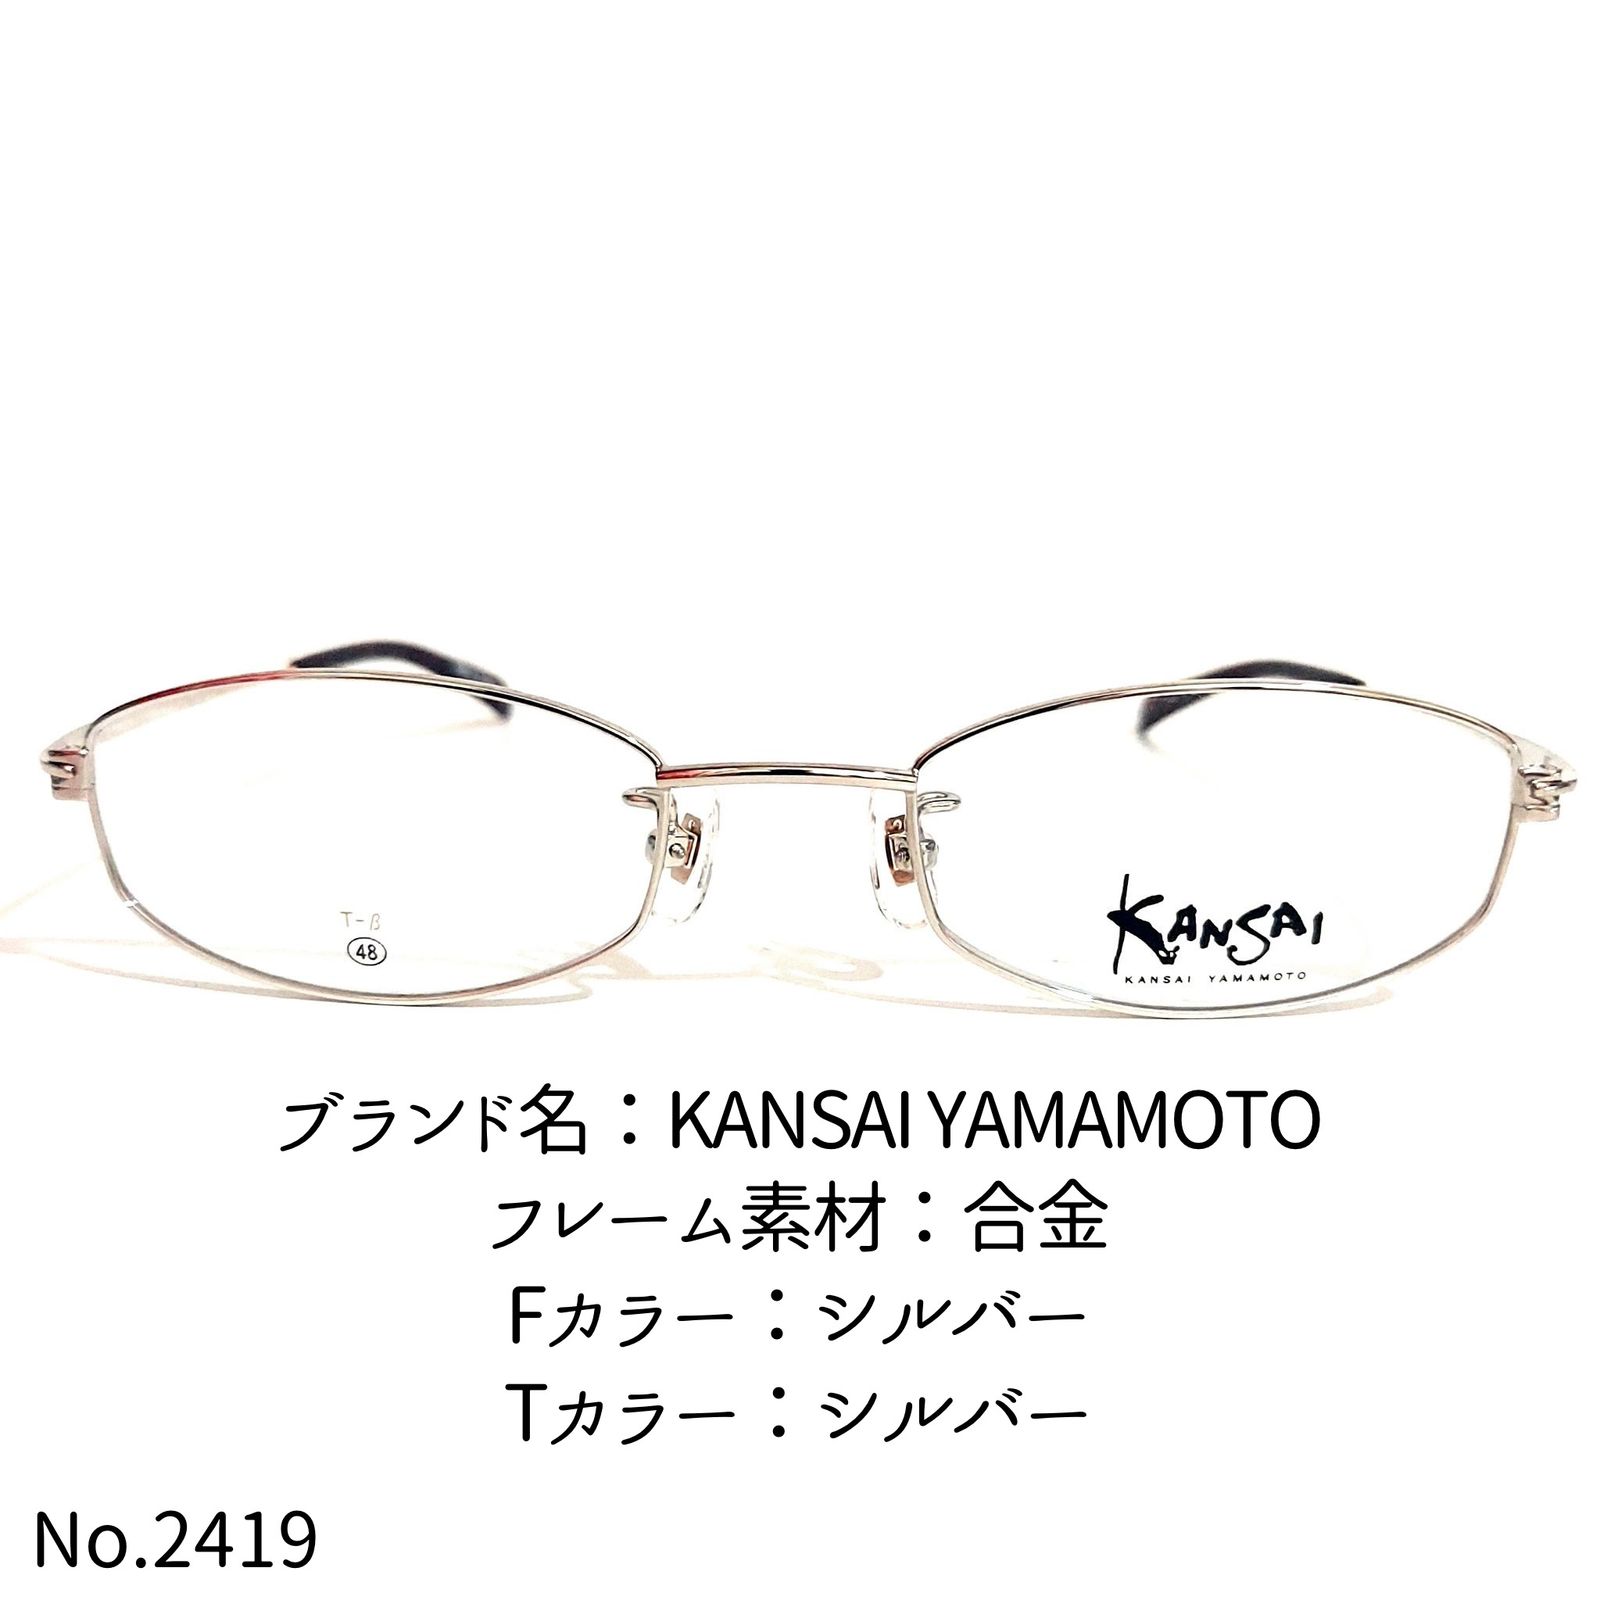 No.2419メガネ KANSAI YAMAMOTO【度数入り込み価格】-